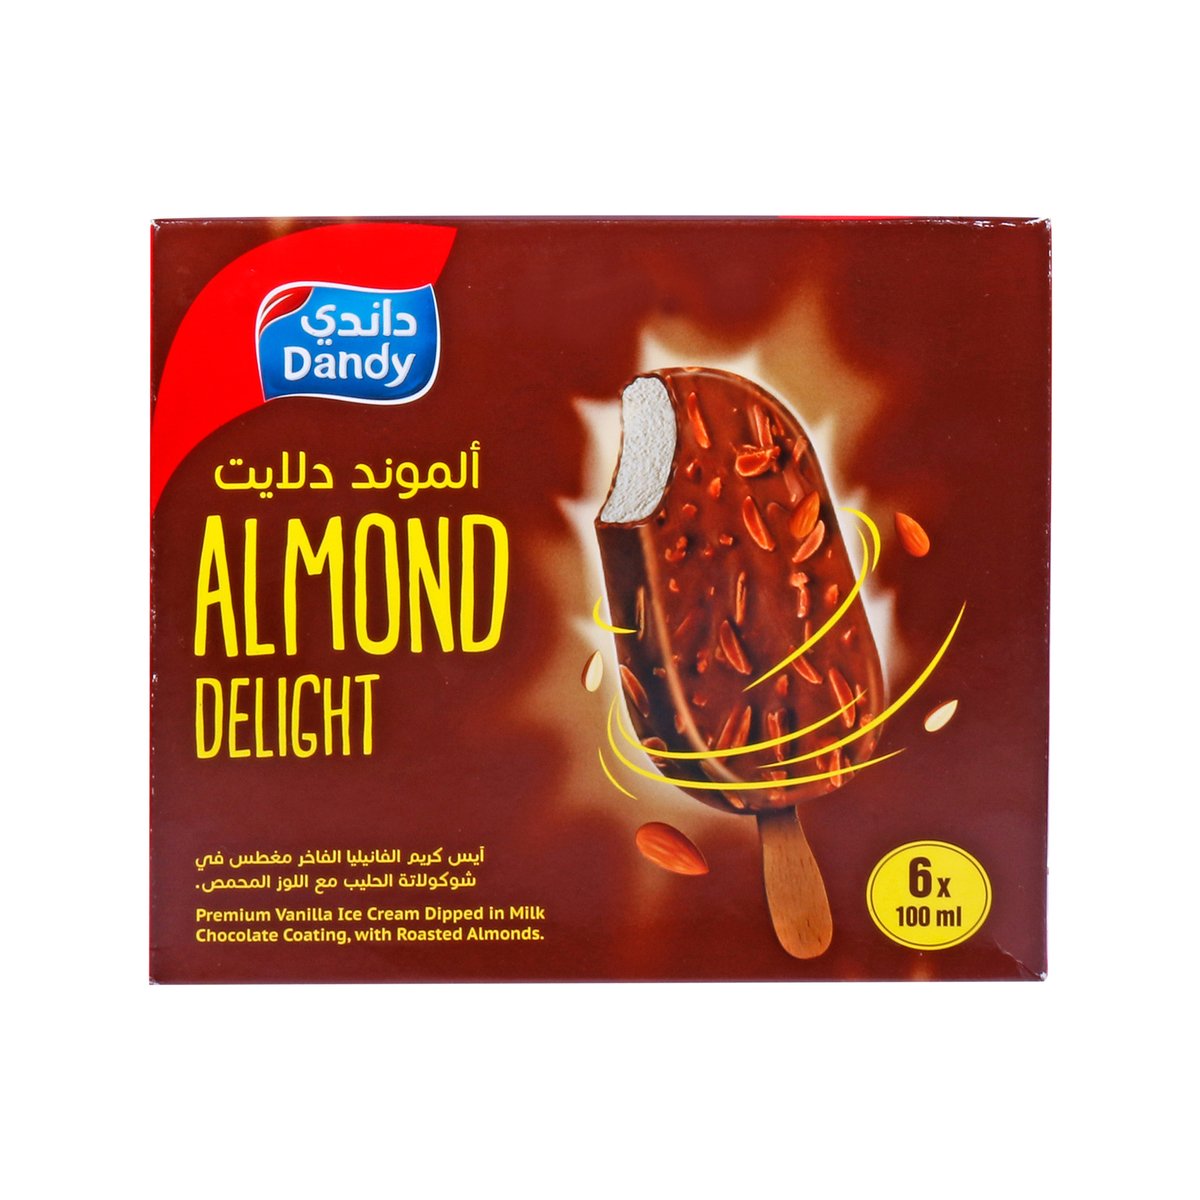 Dandy Almond Delight Ice Cream 6 x 100 ml